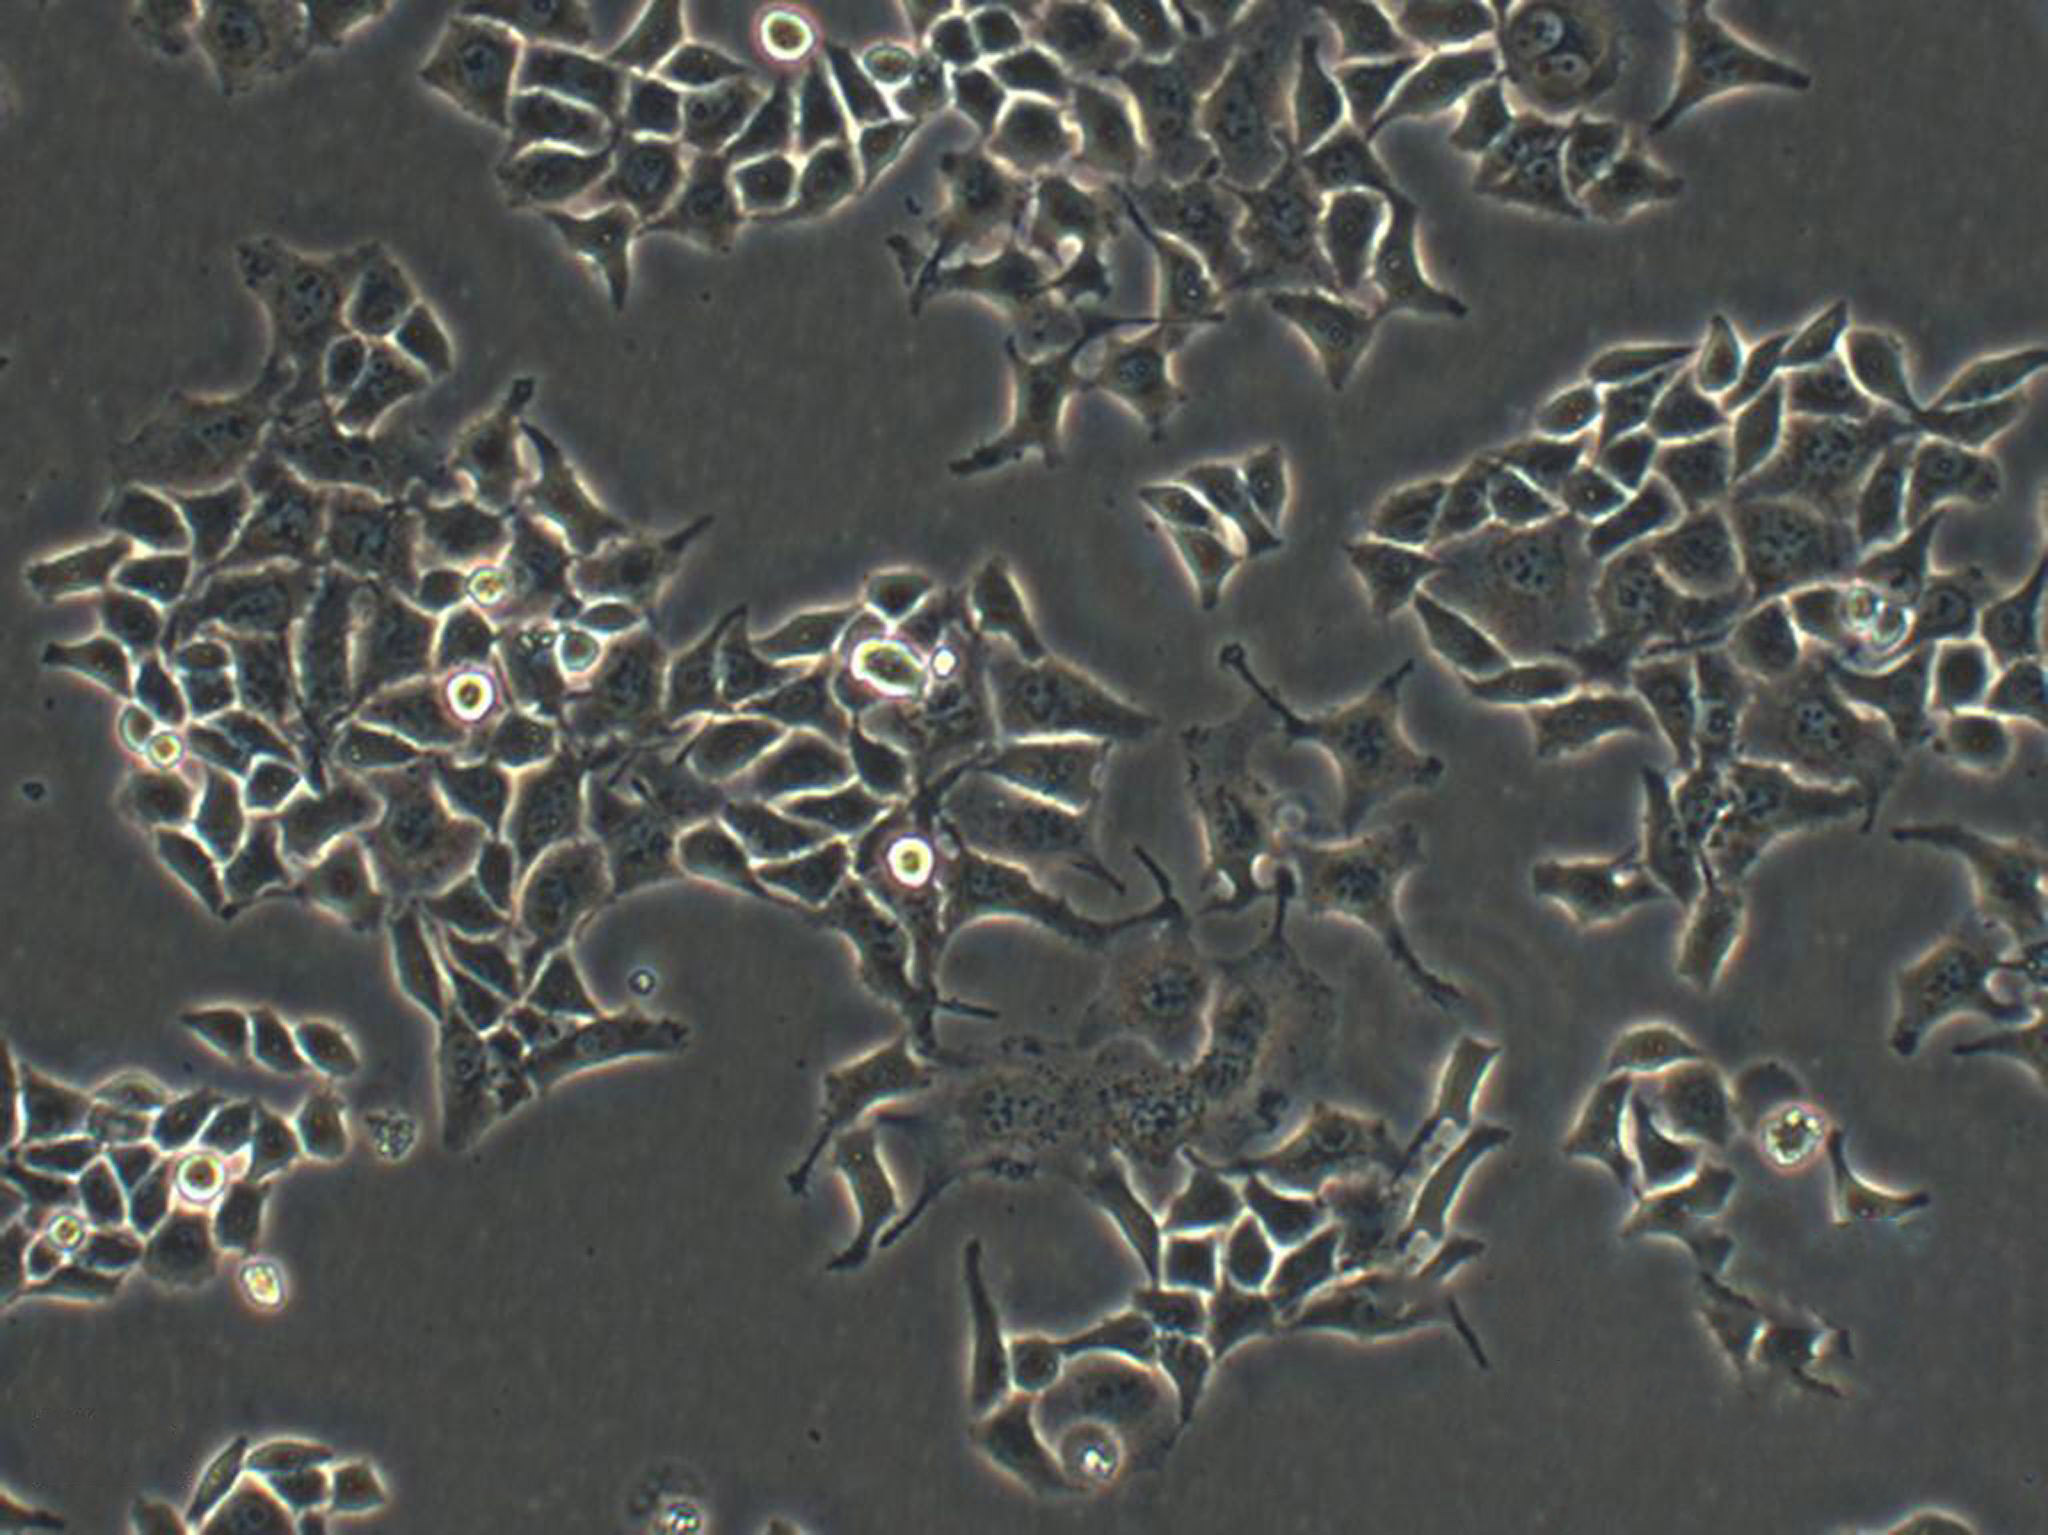 PNT1A epithelioid cells人前列腺癌细胞系,PNT1A epithelioid cells